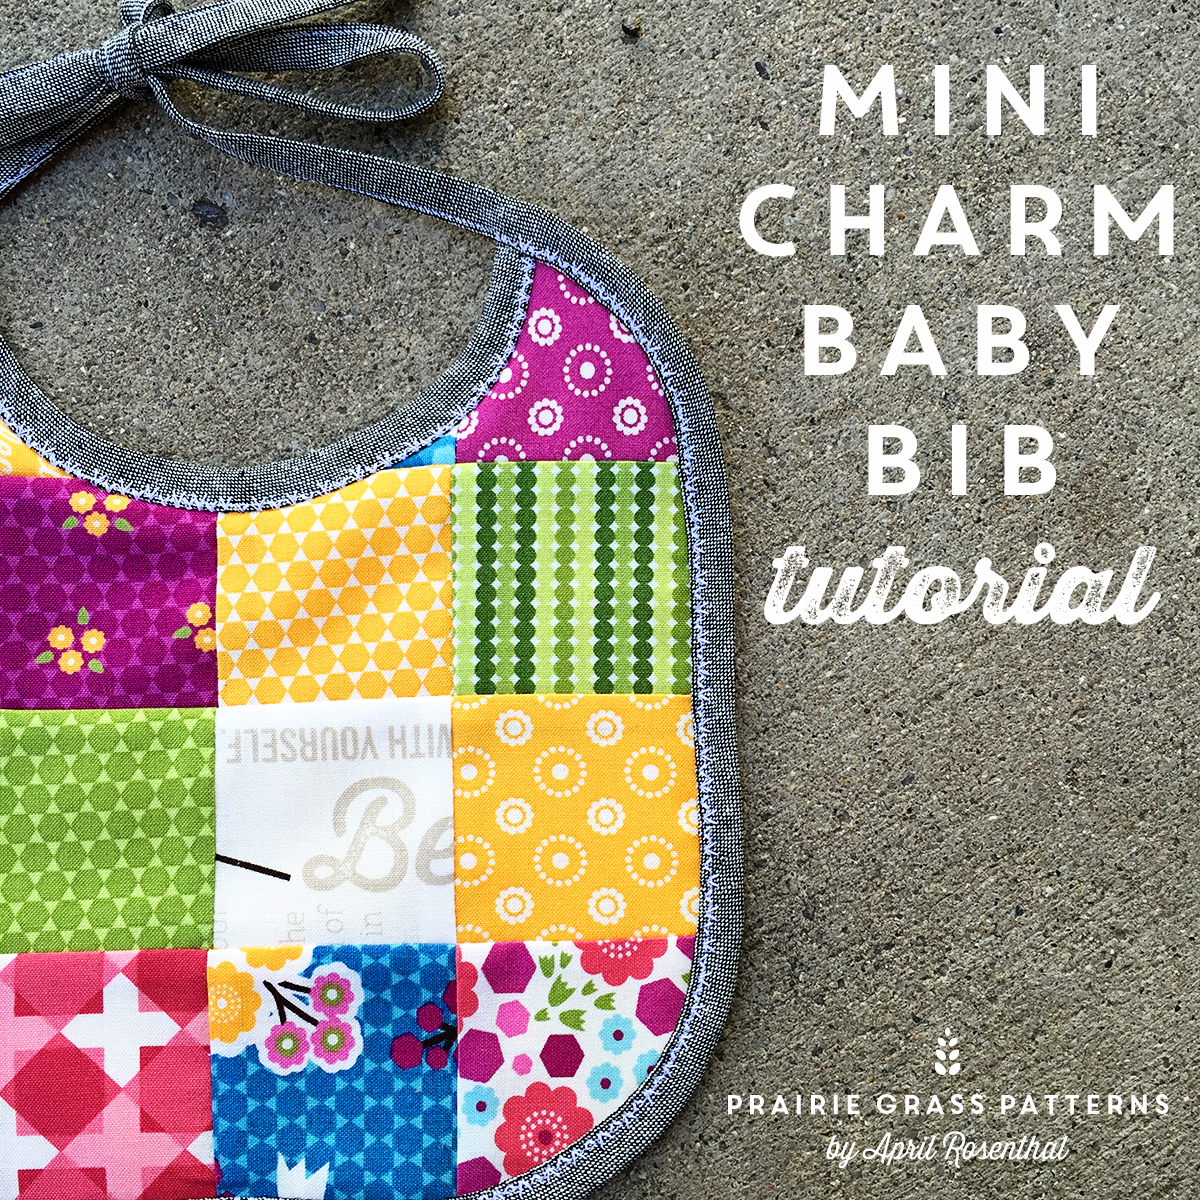 MiniCharm Baby Bib by April Rosenthal